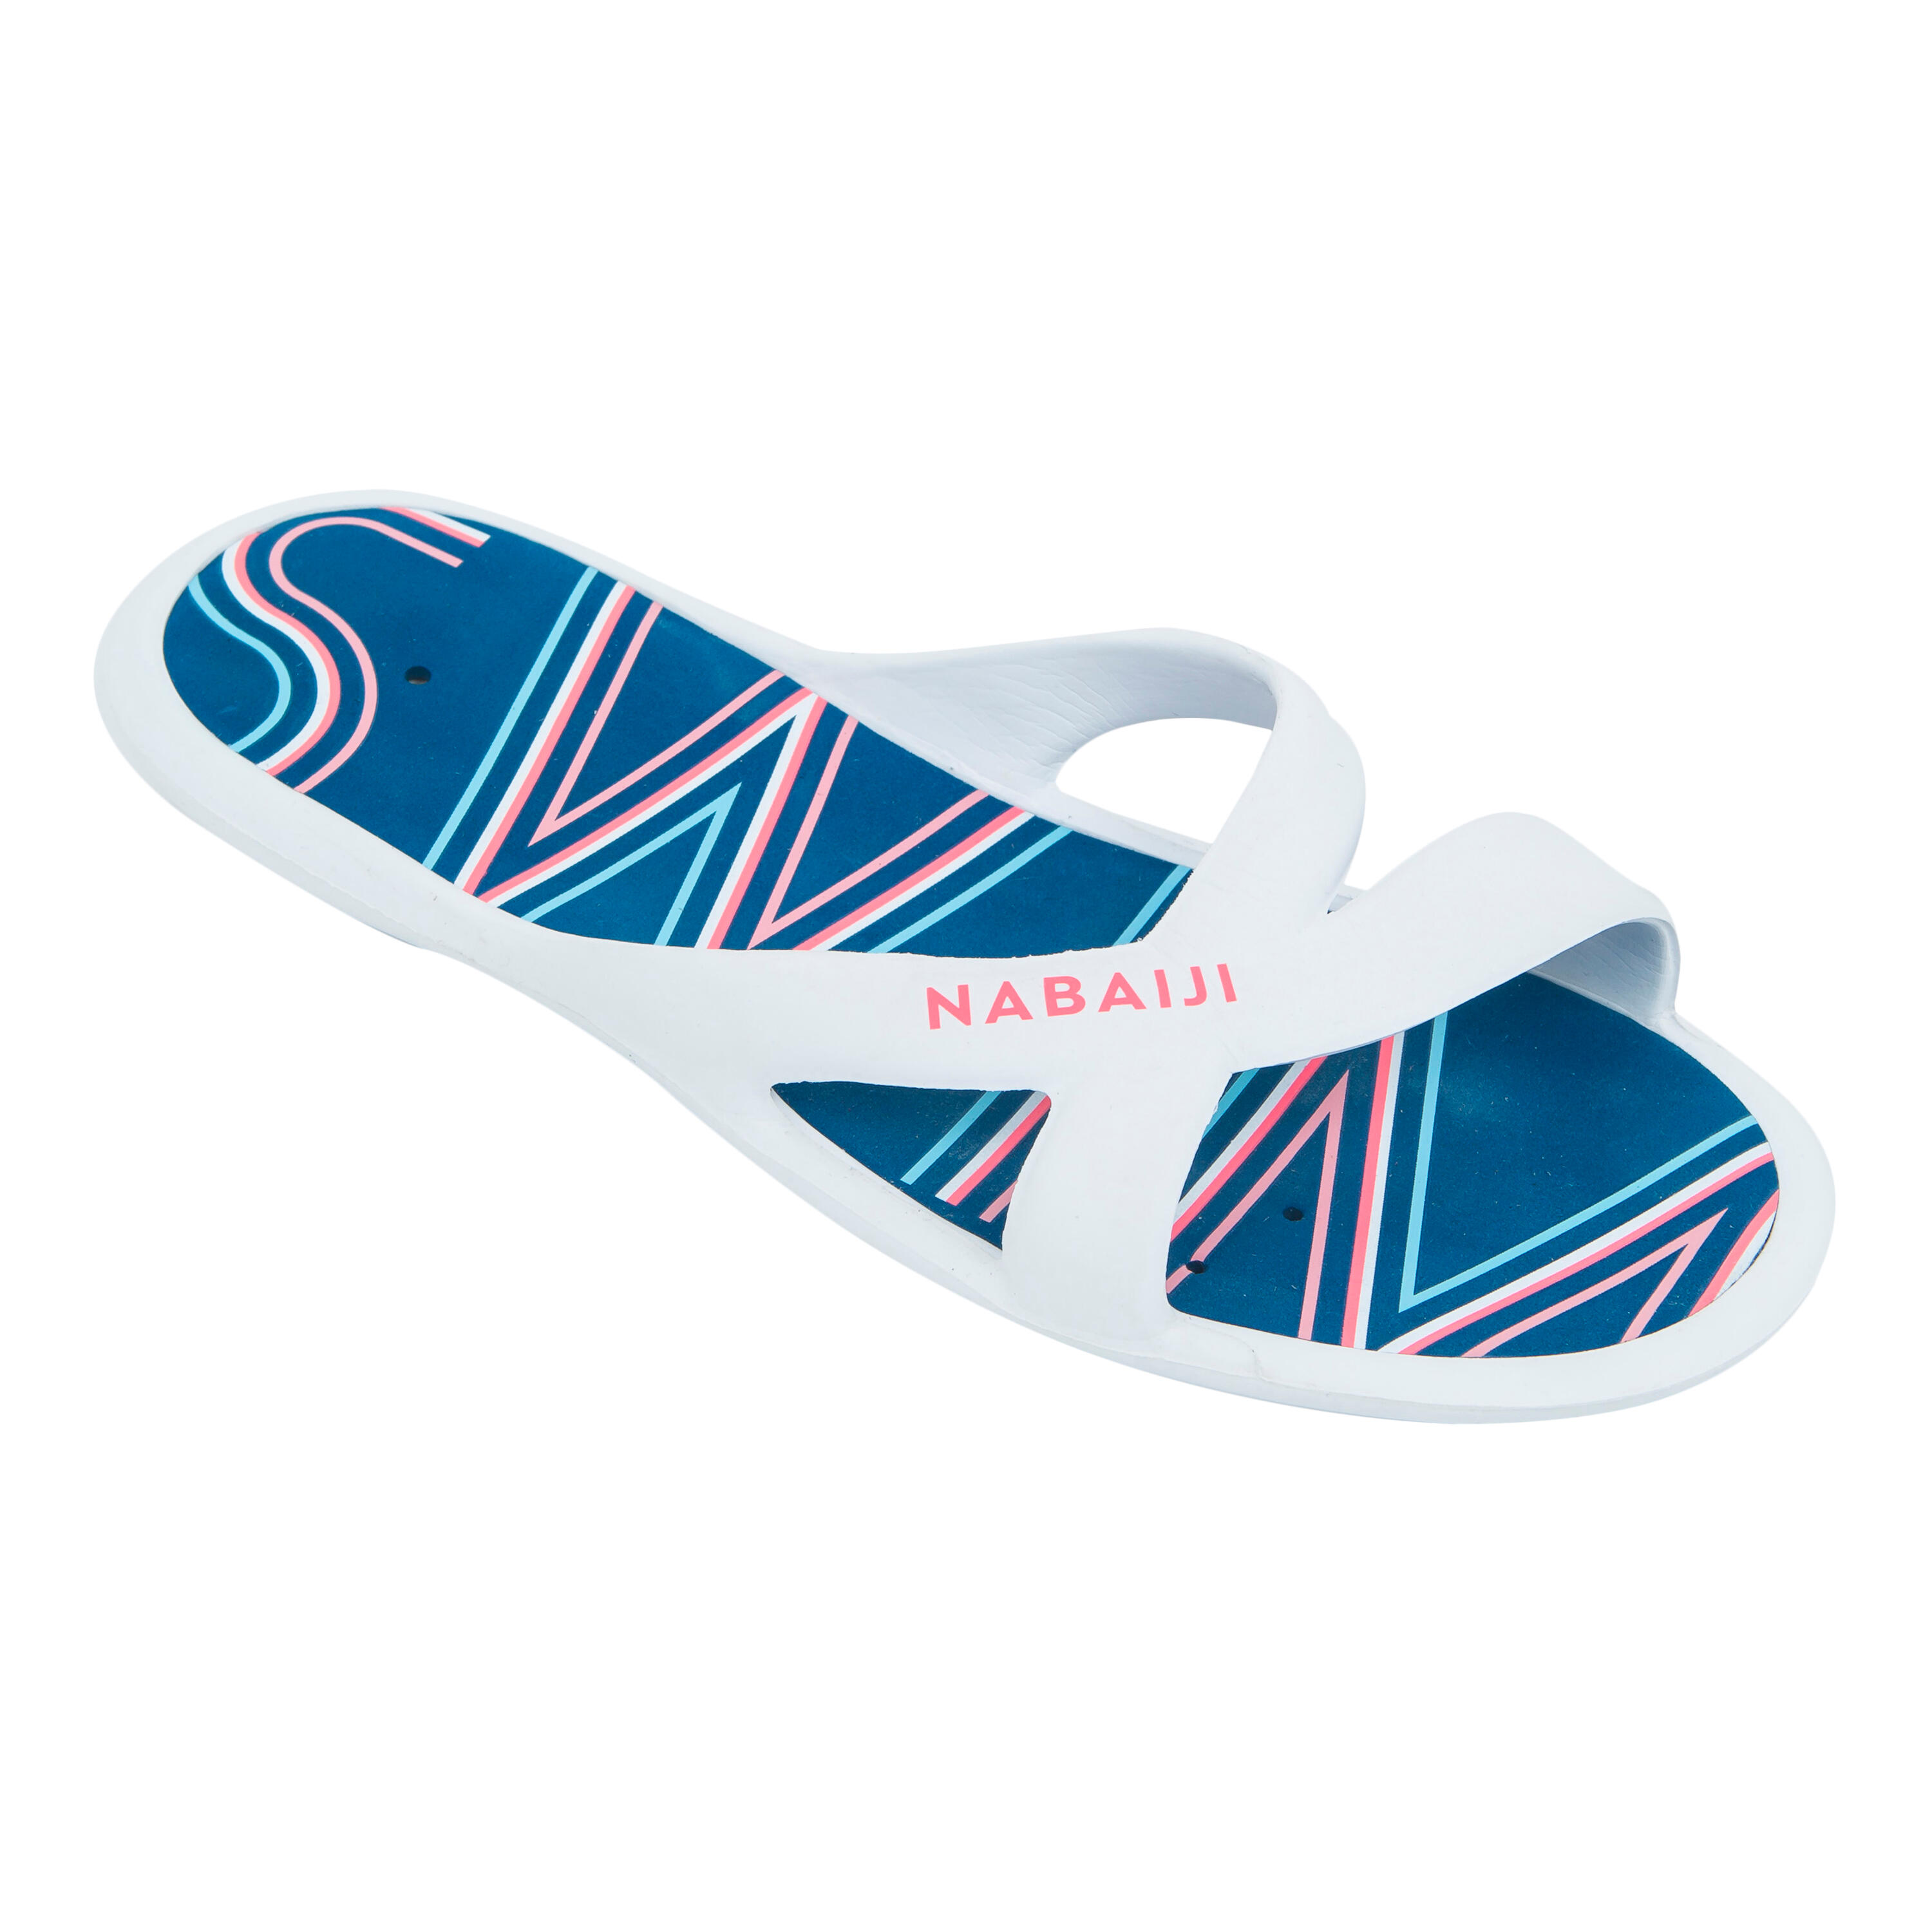 Women's pool sandals - Slap 500 print - Swim white blue 3/4